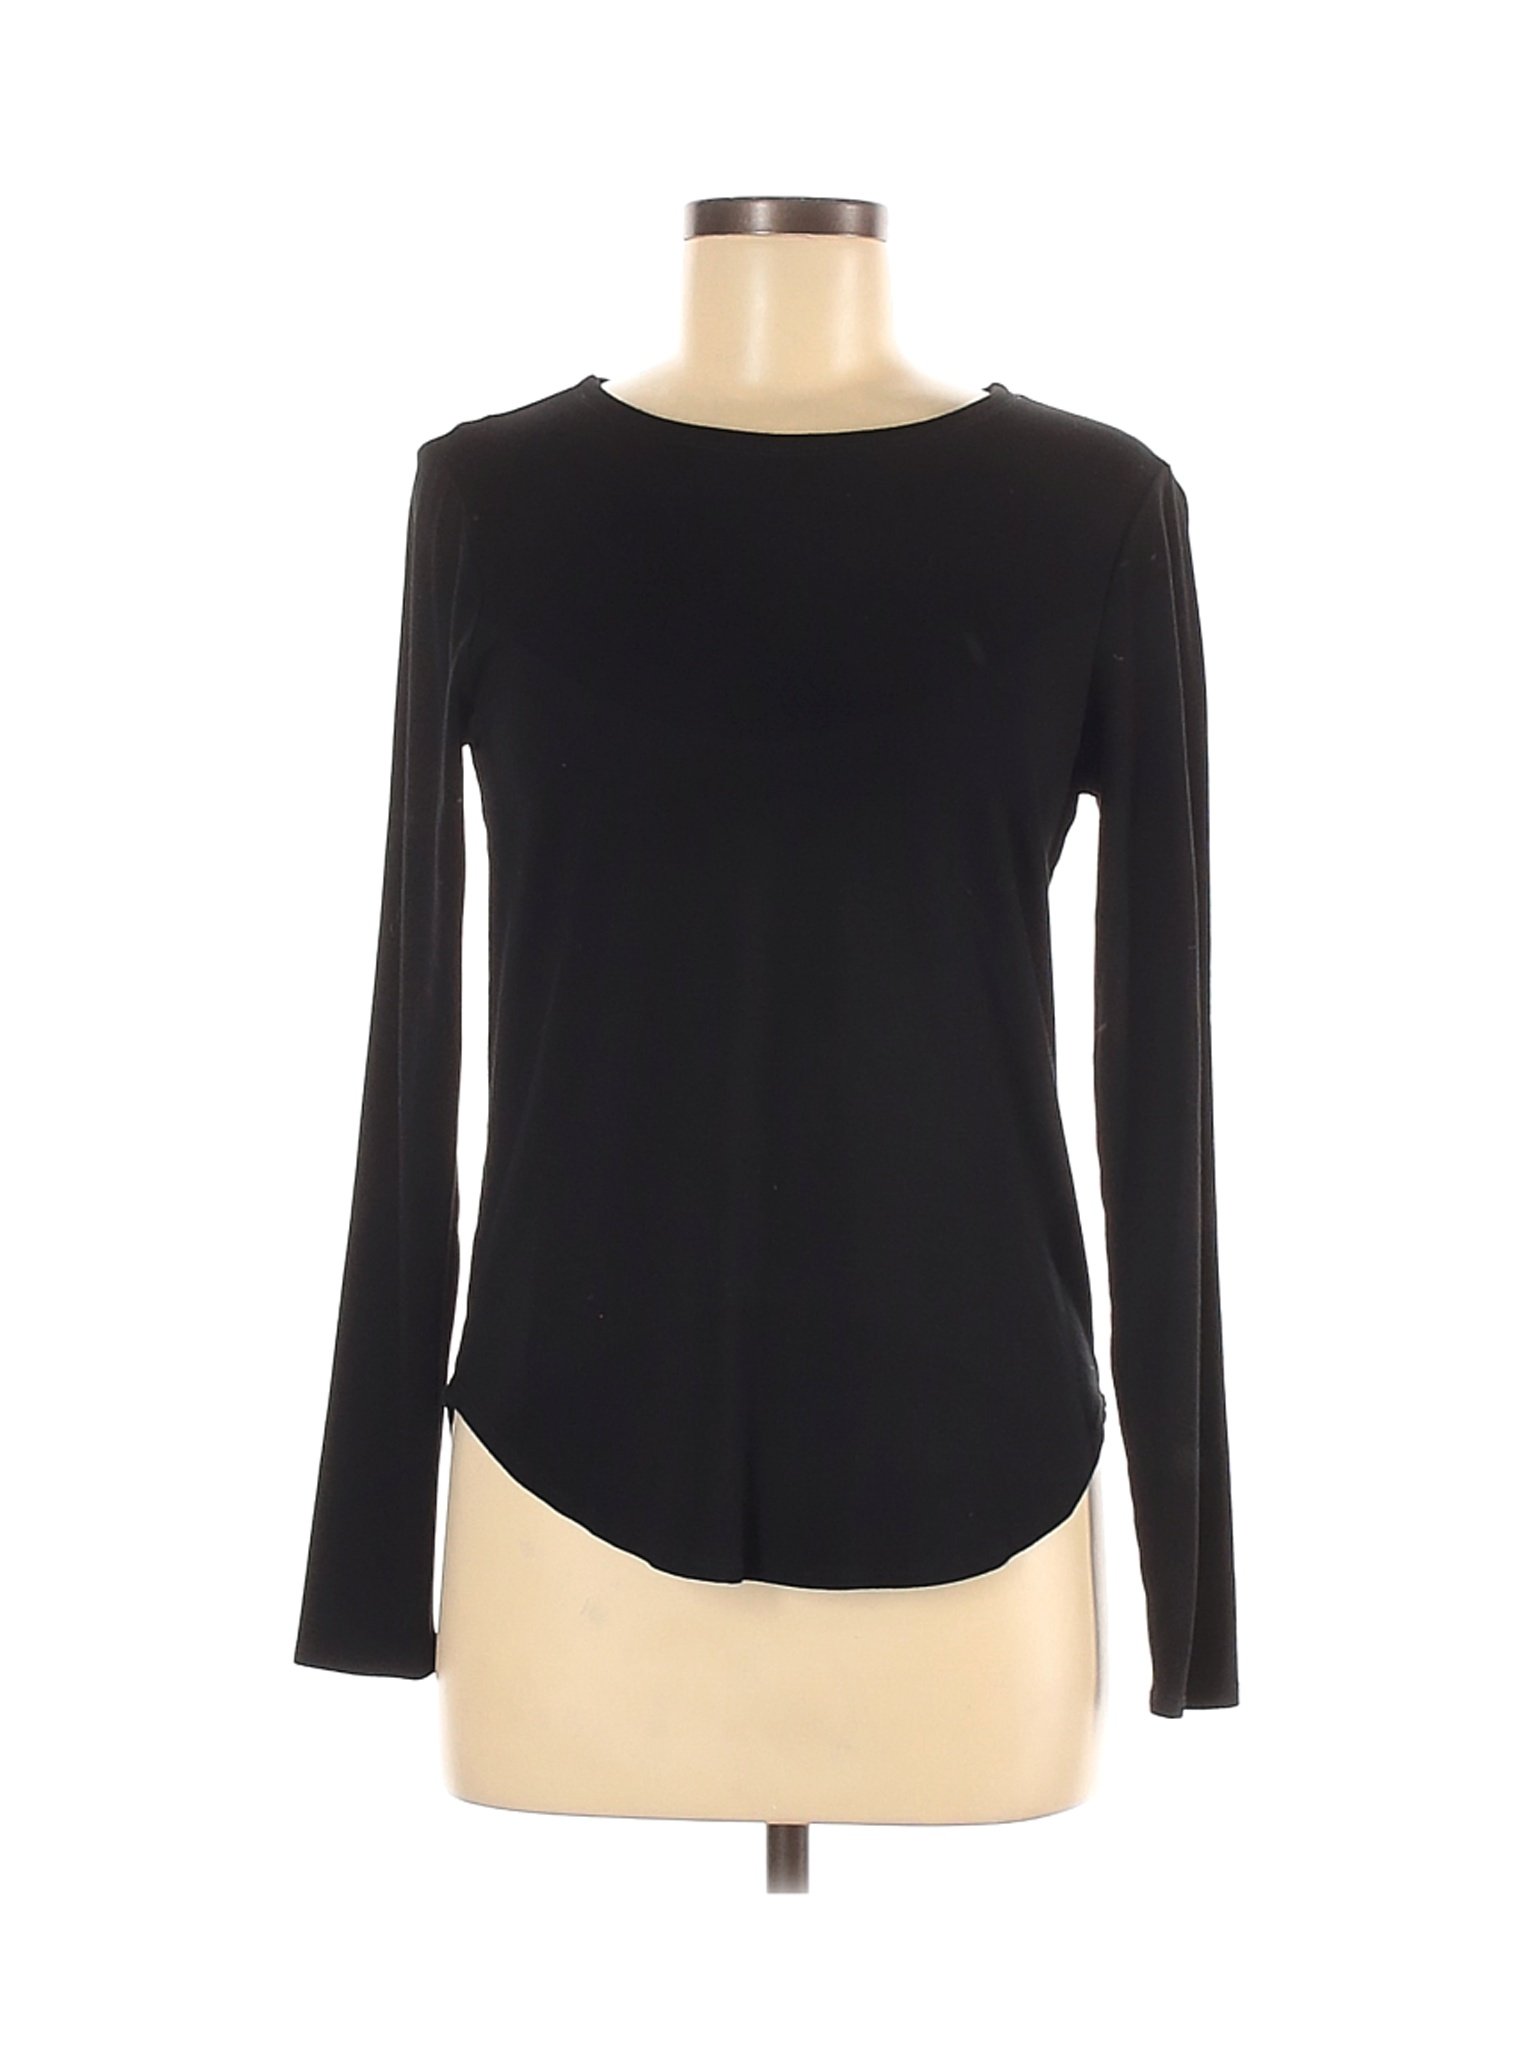 Cupio Women Black Long Sleeve T-Shirt M | eBay